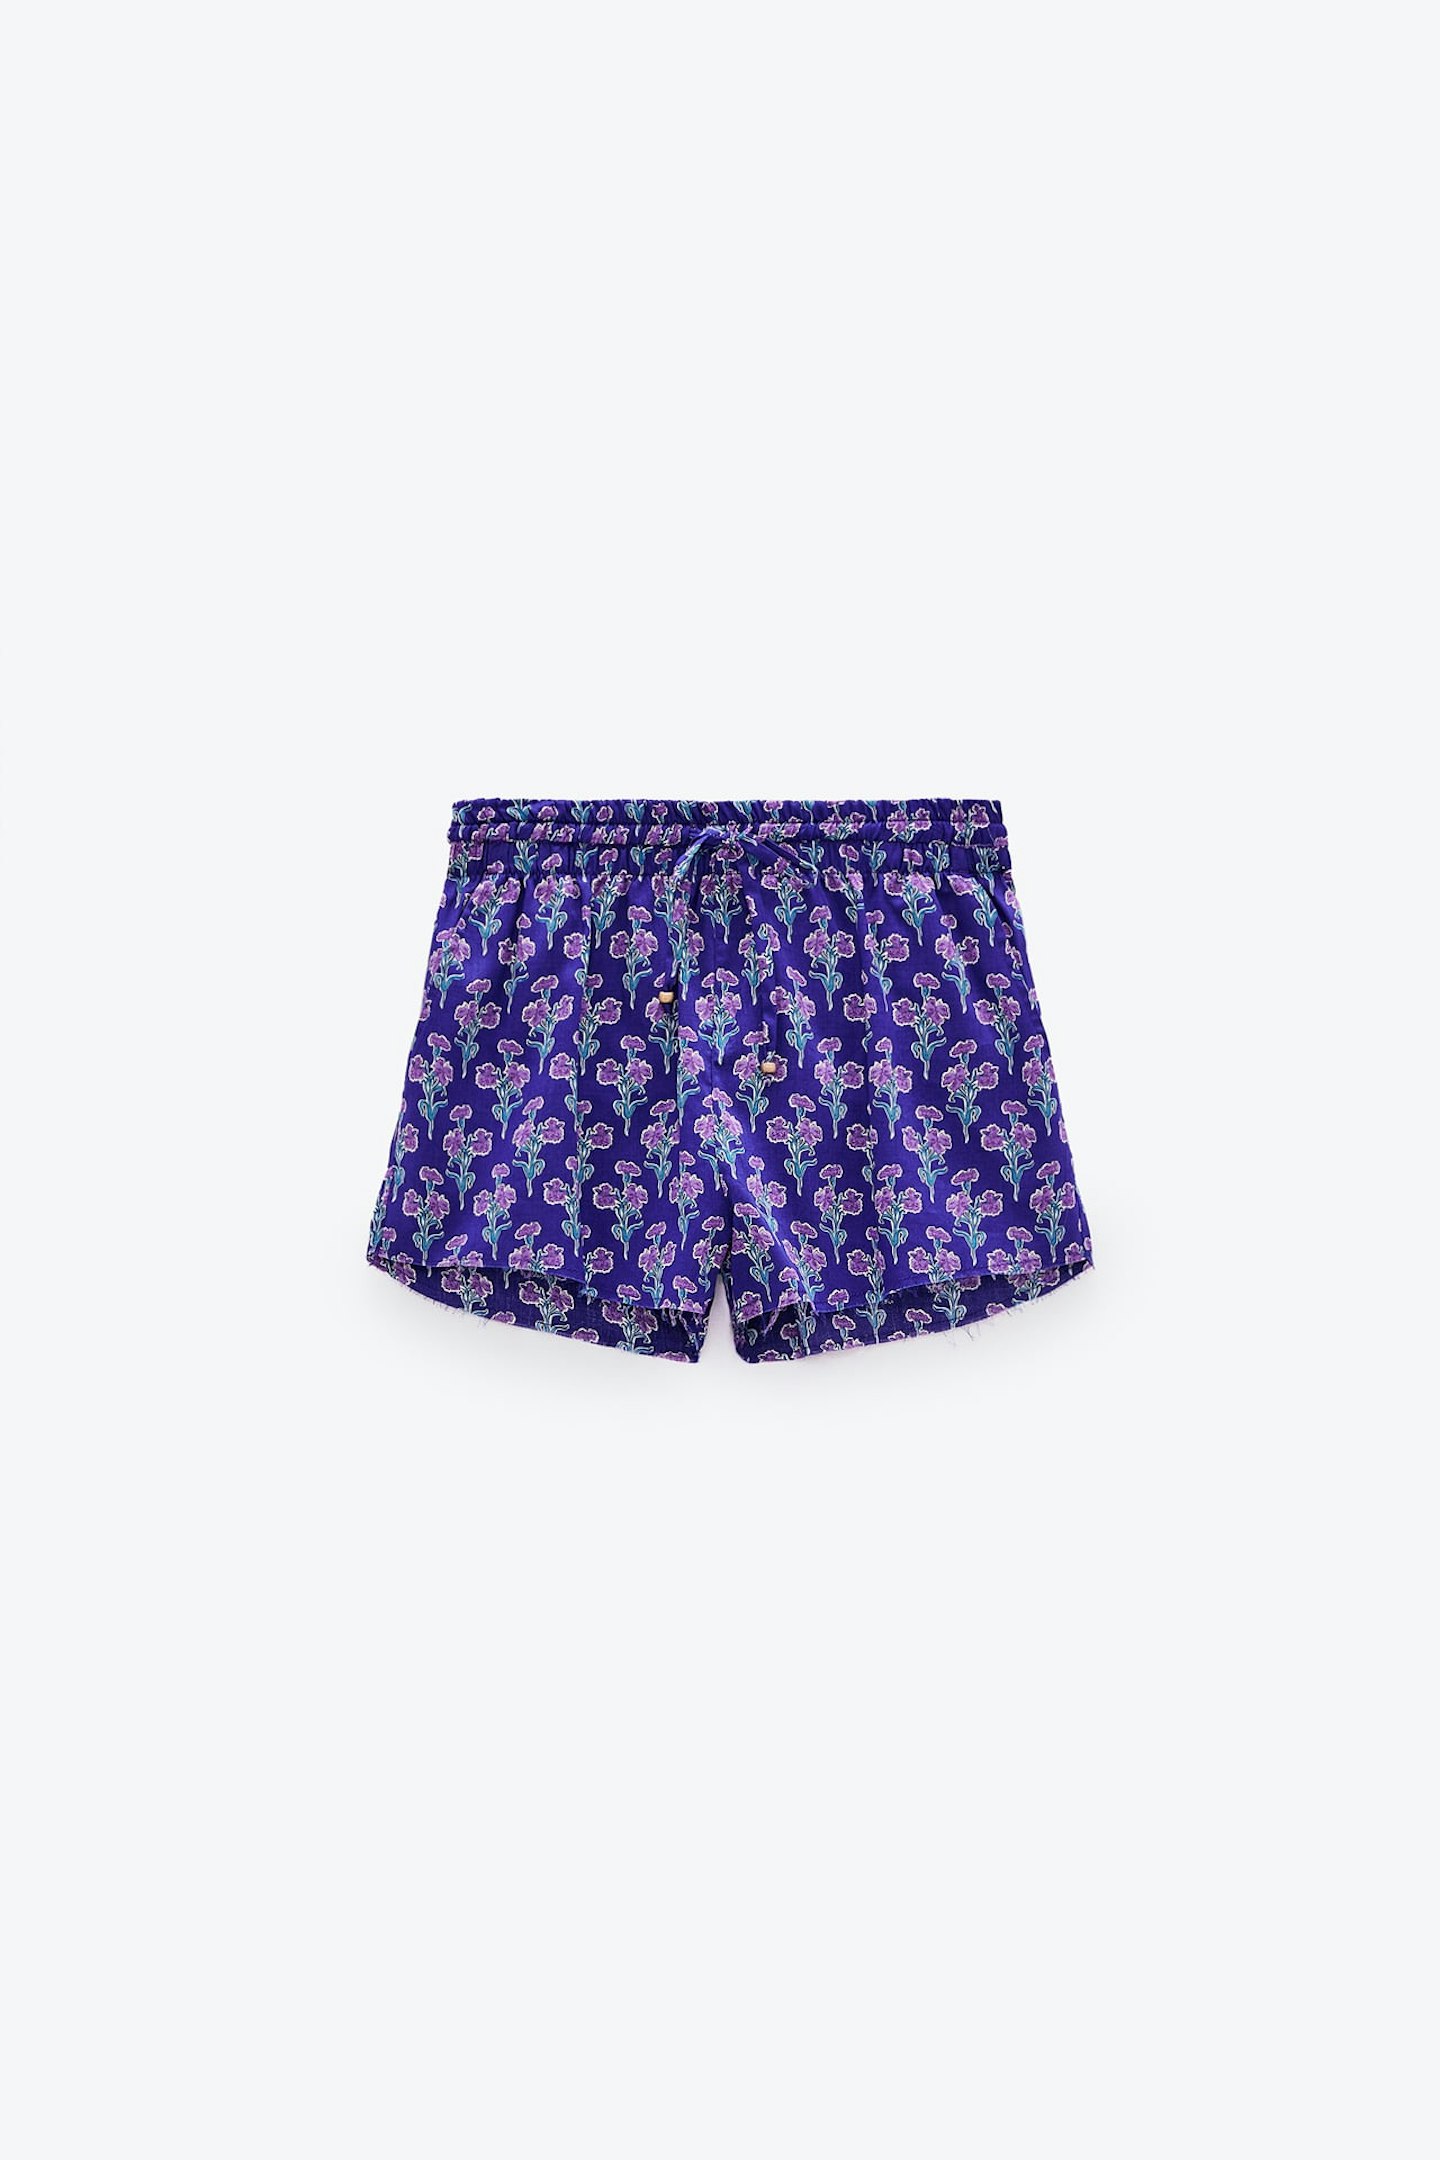 Libra - Printed Bermuda Shorts, £25.99